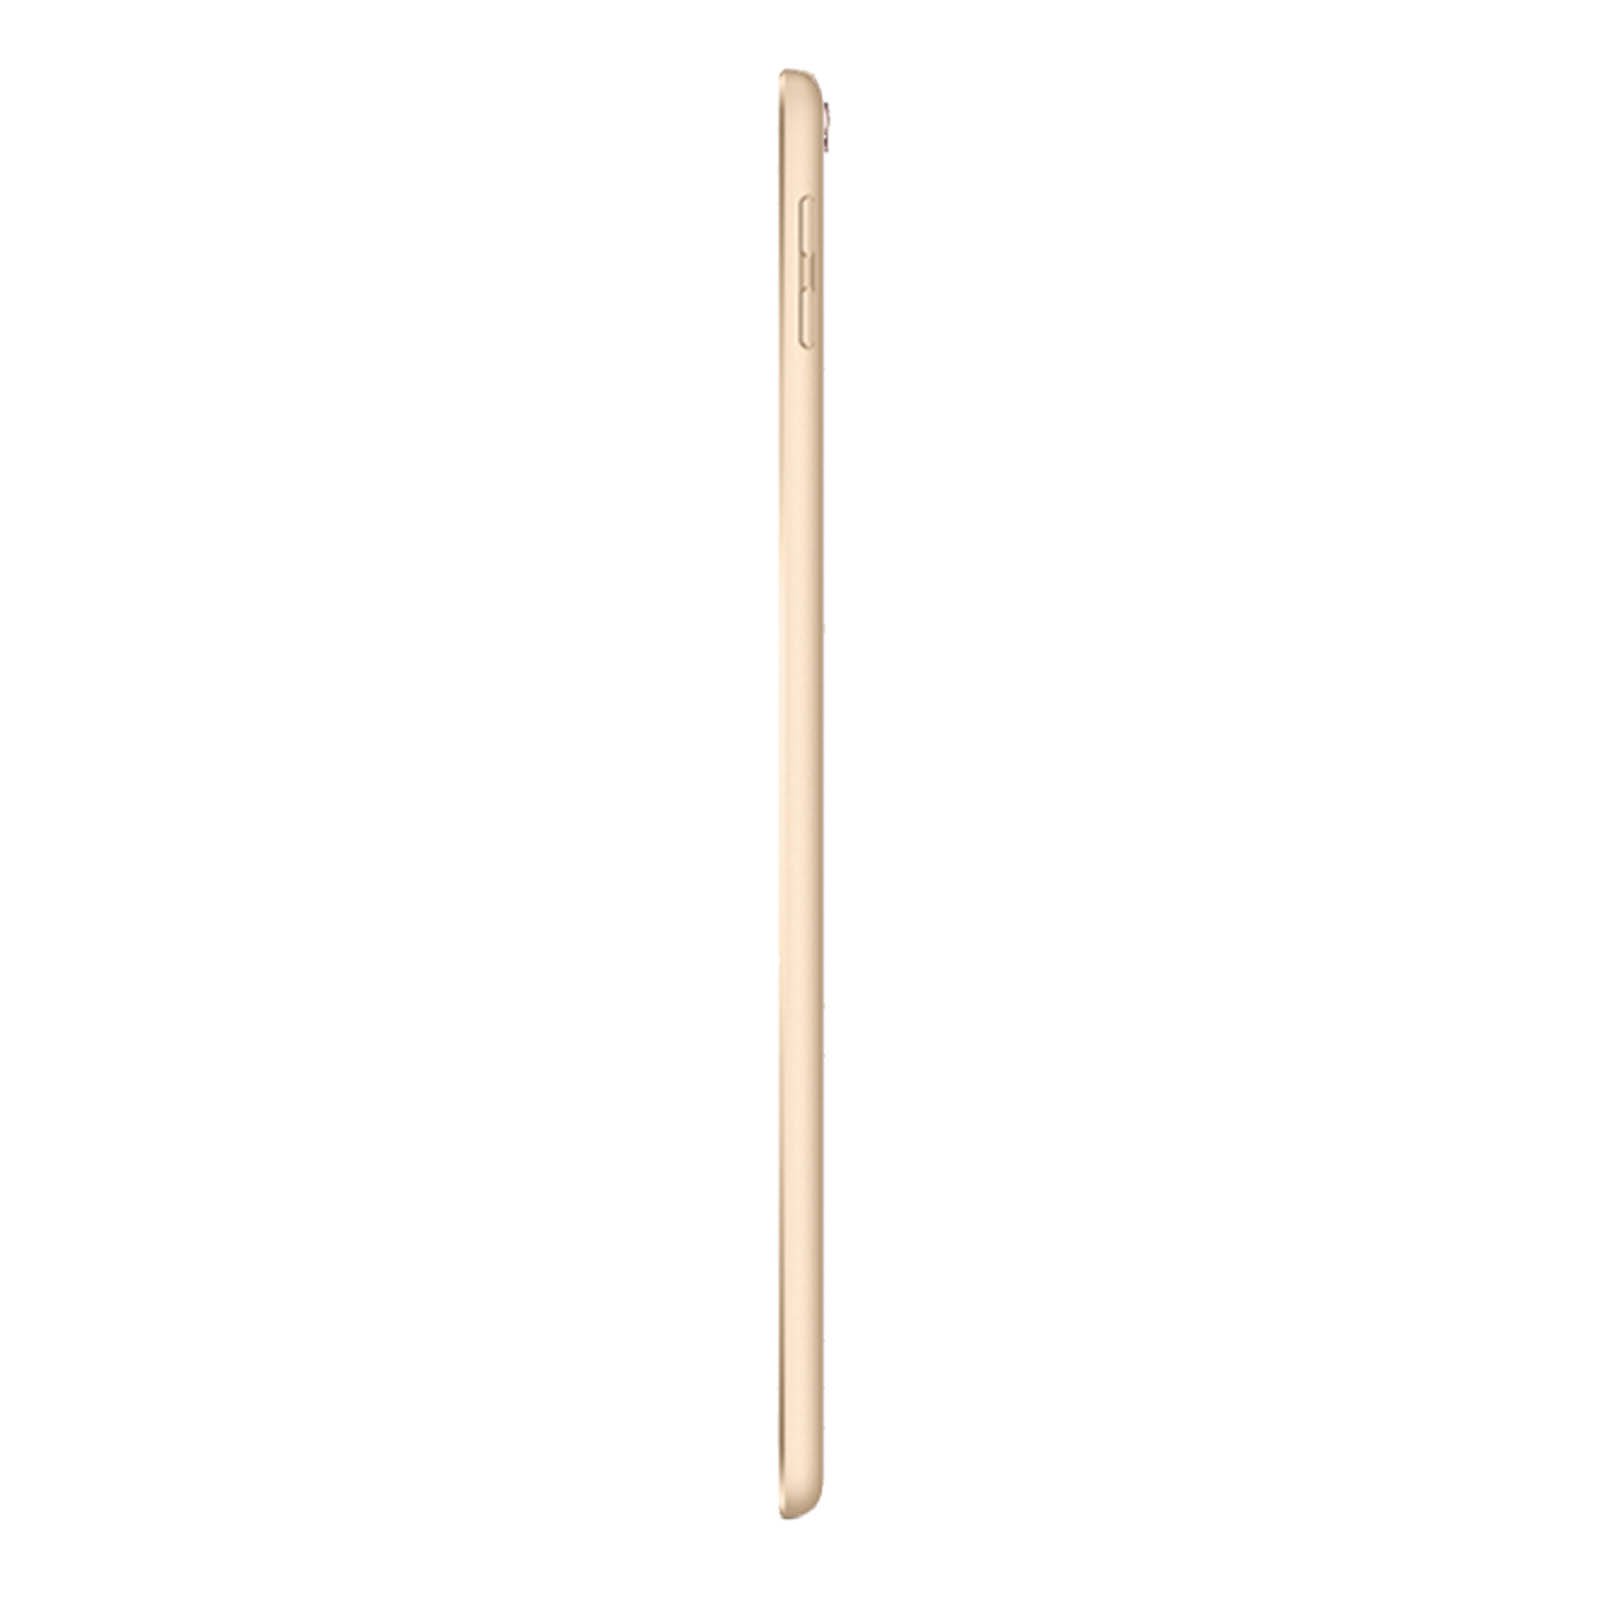 iPad Pro 10.5 Inch 64GB Gold Good - Unlocked